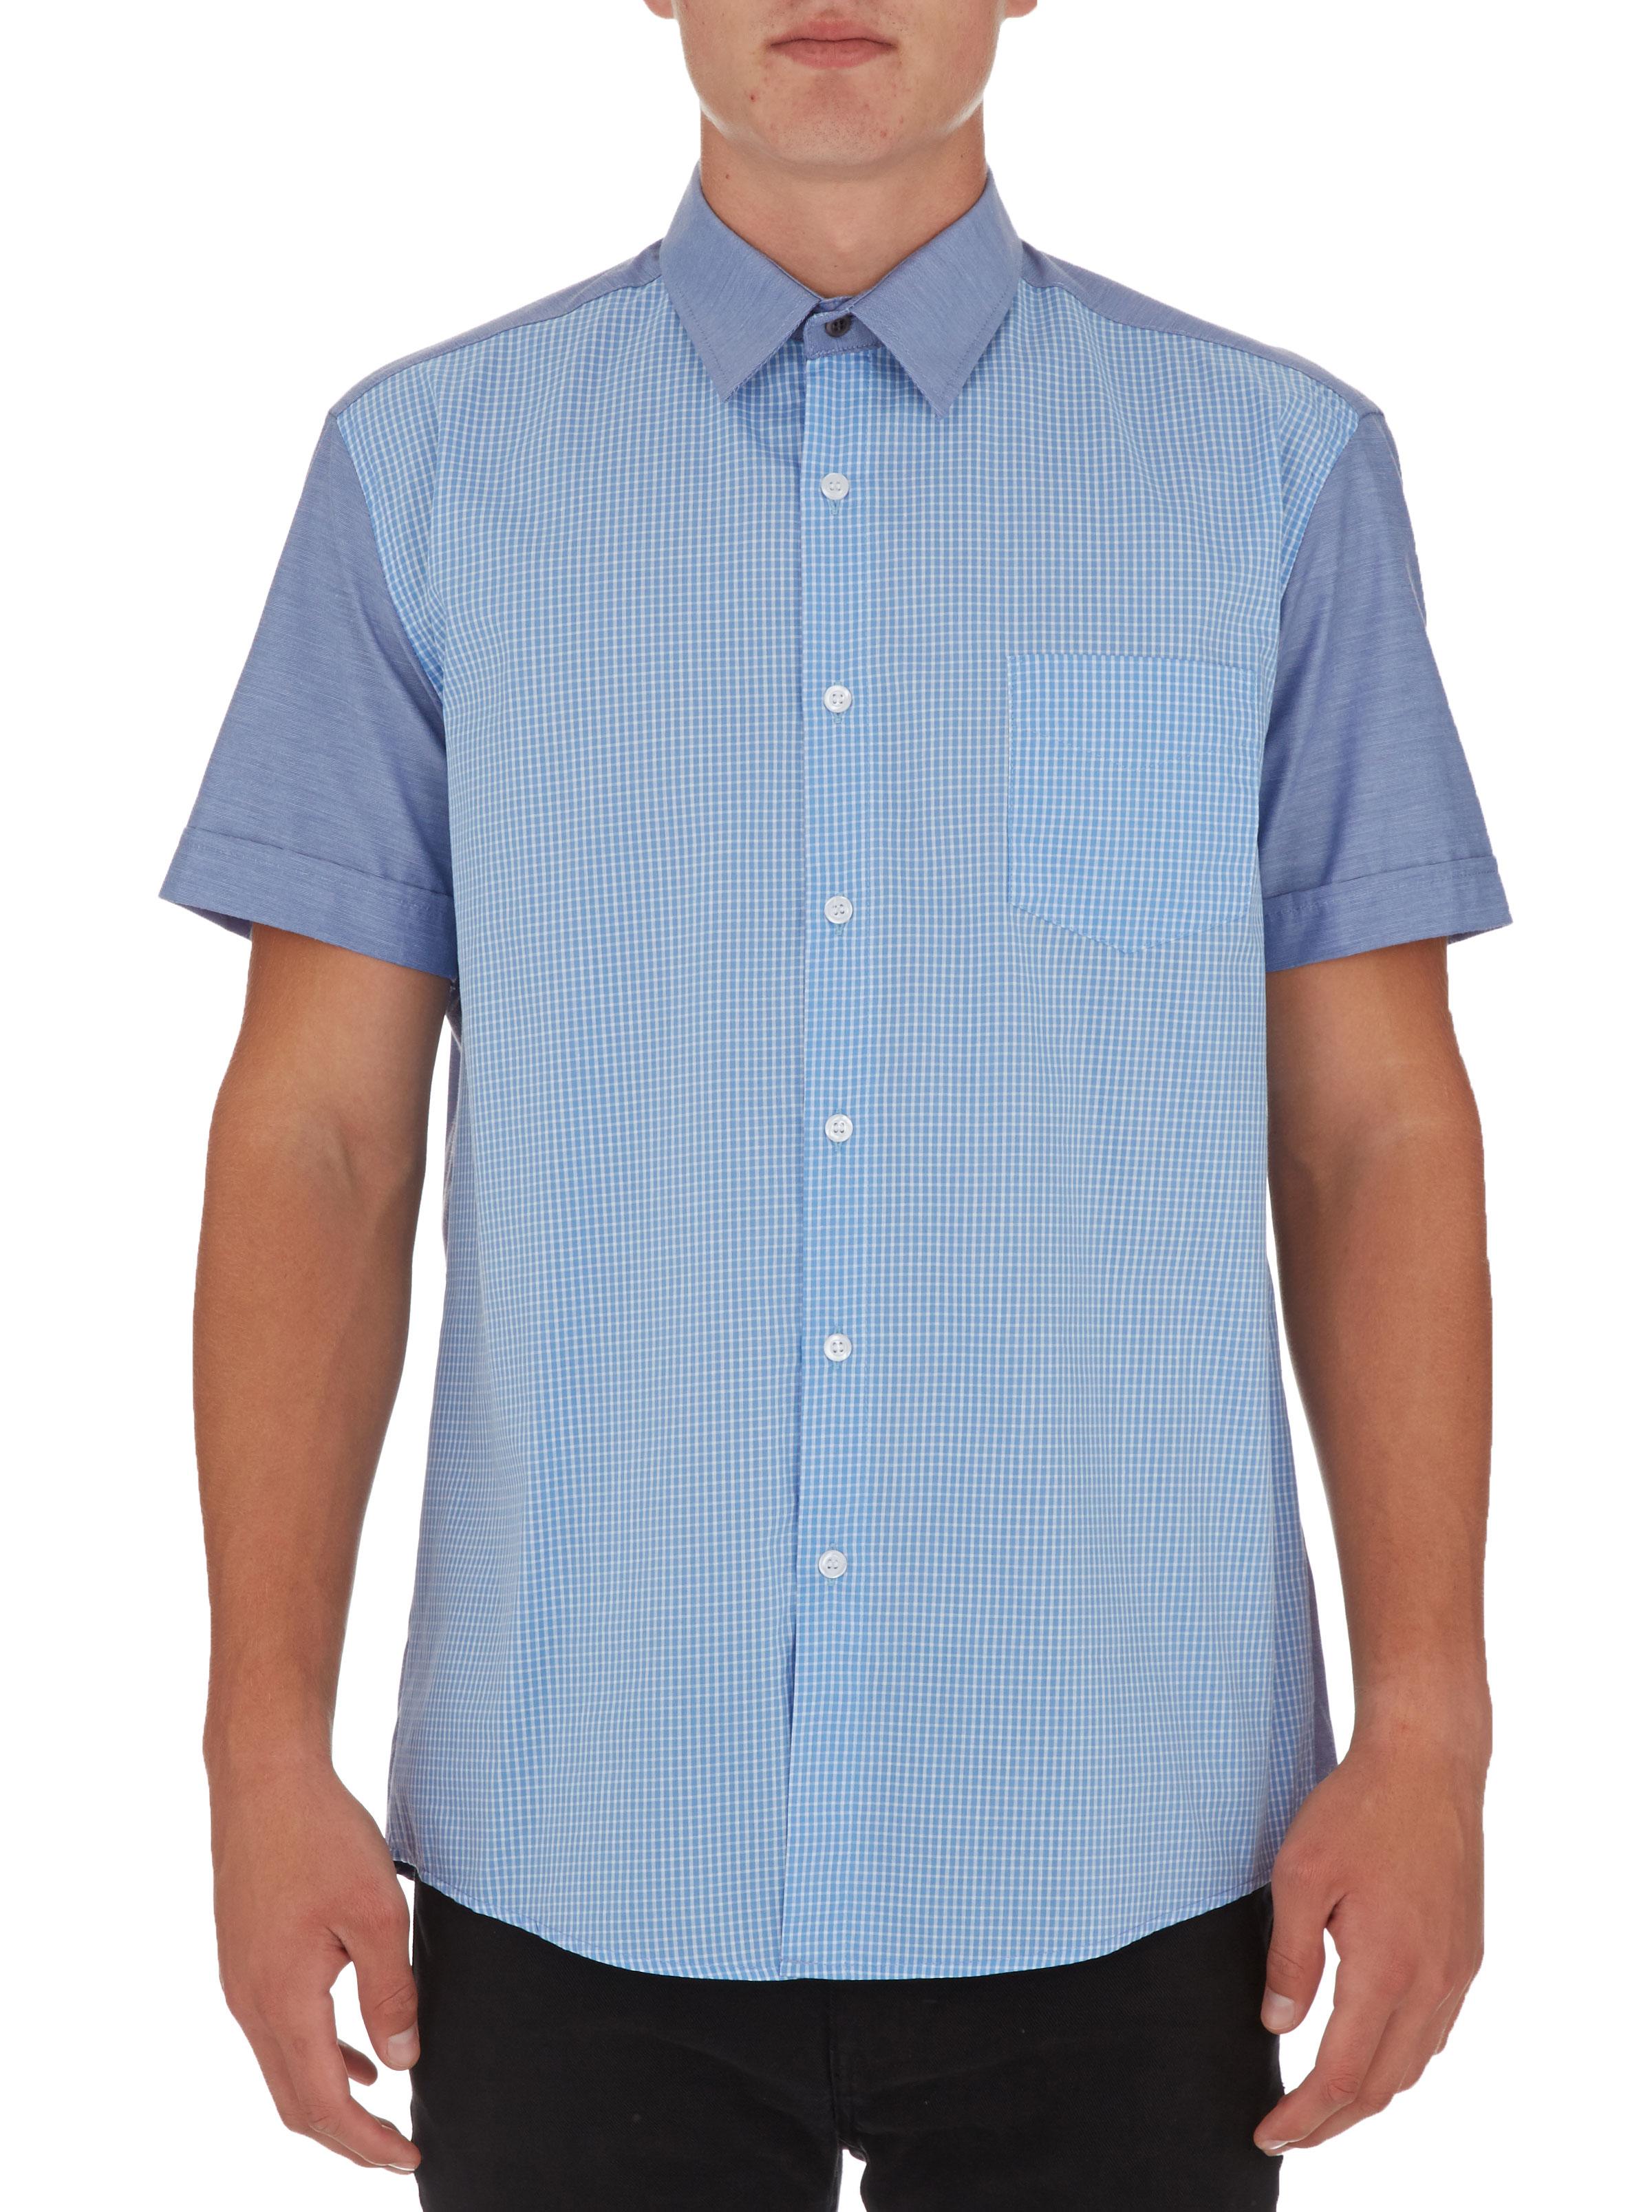 Combination short sleeve shirt Pale Blue edited Shirts | Superbalist.com